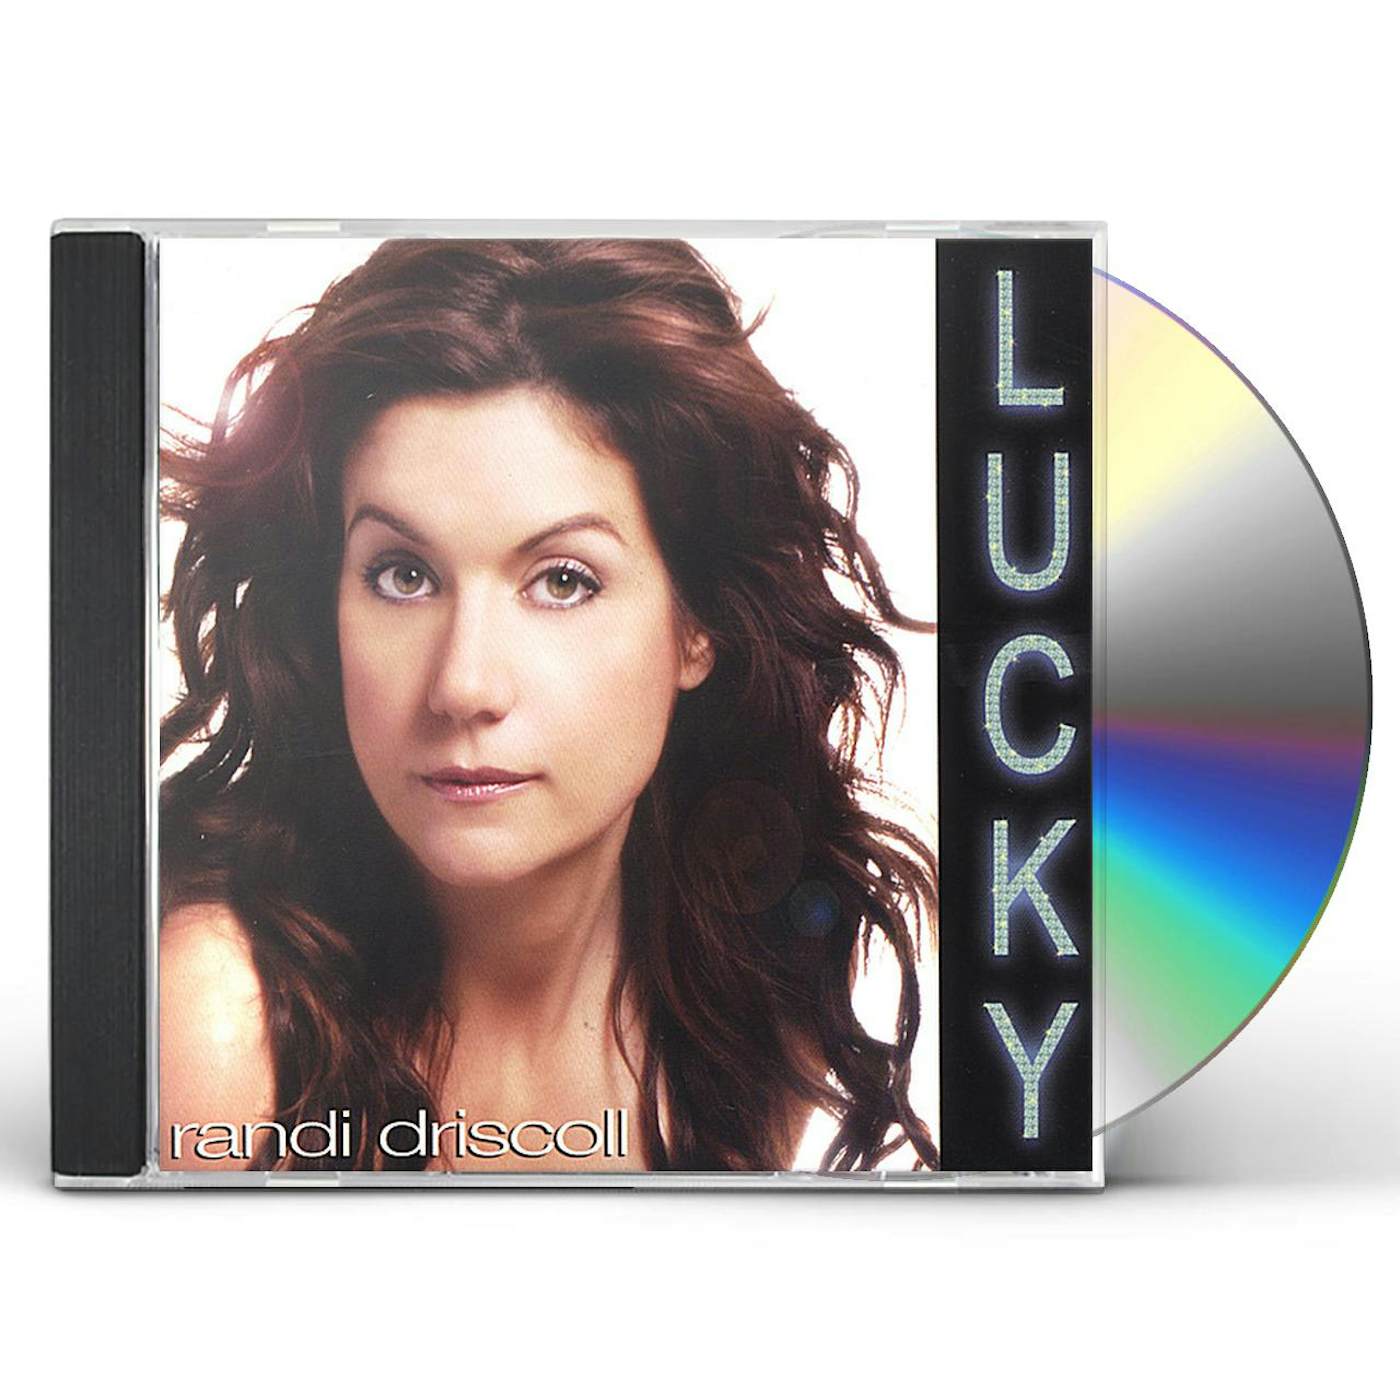 Randi Driscoll LUCKY CD